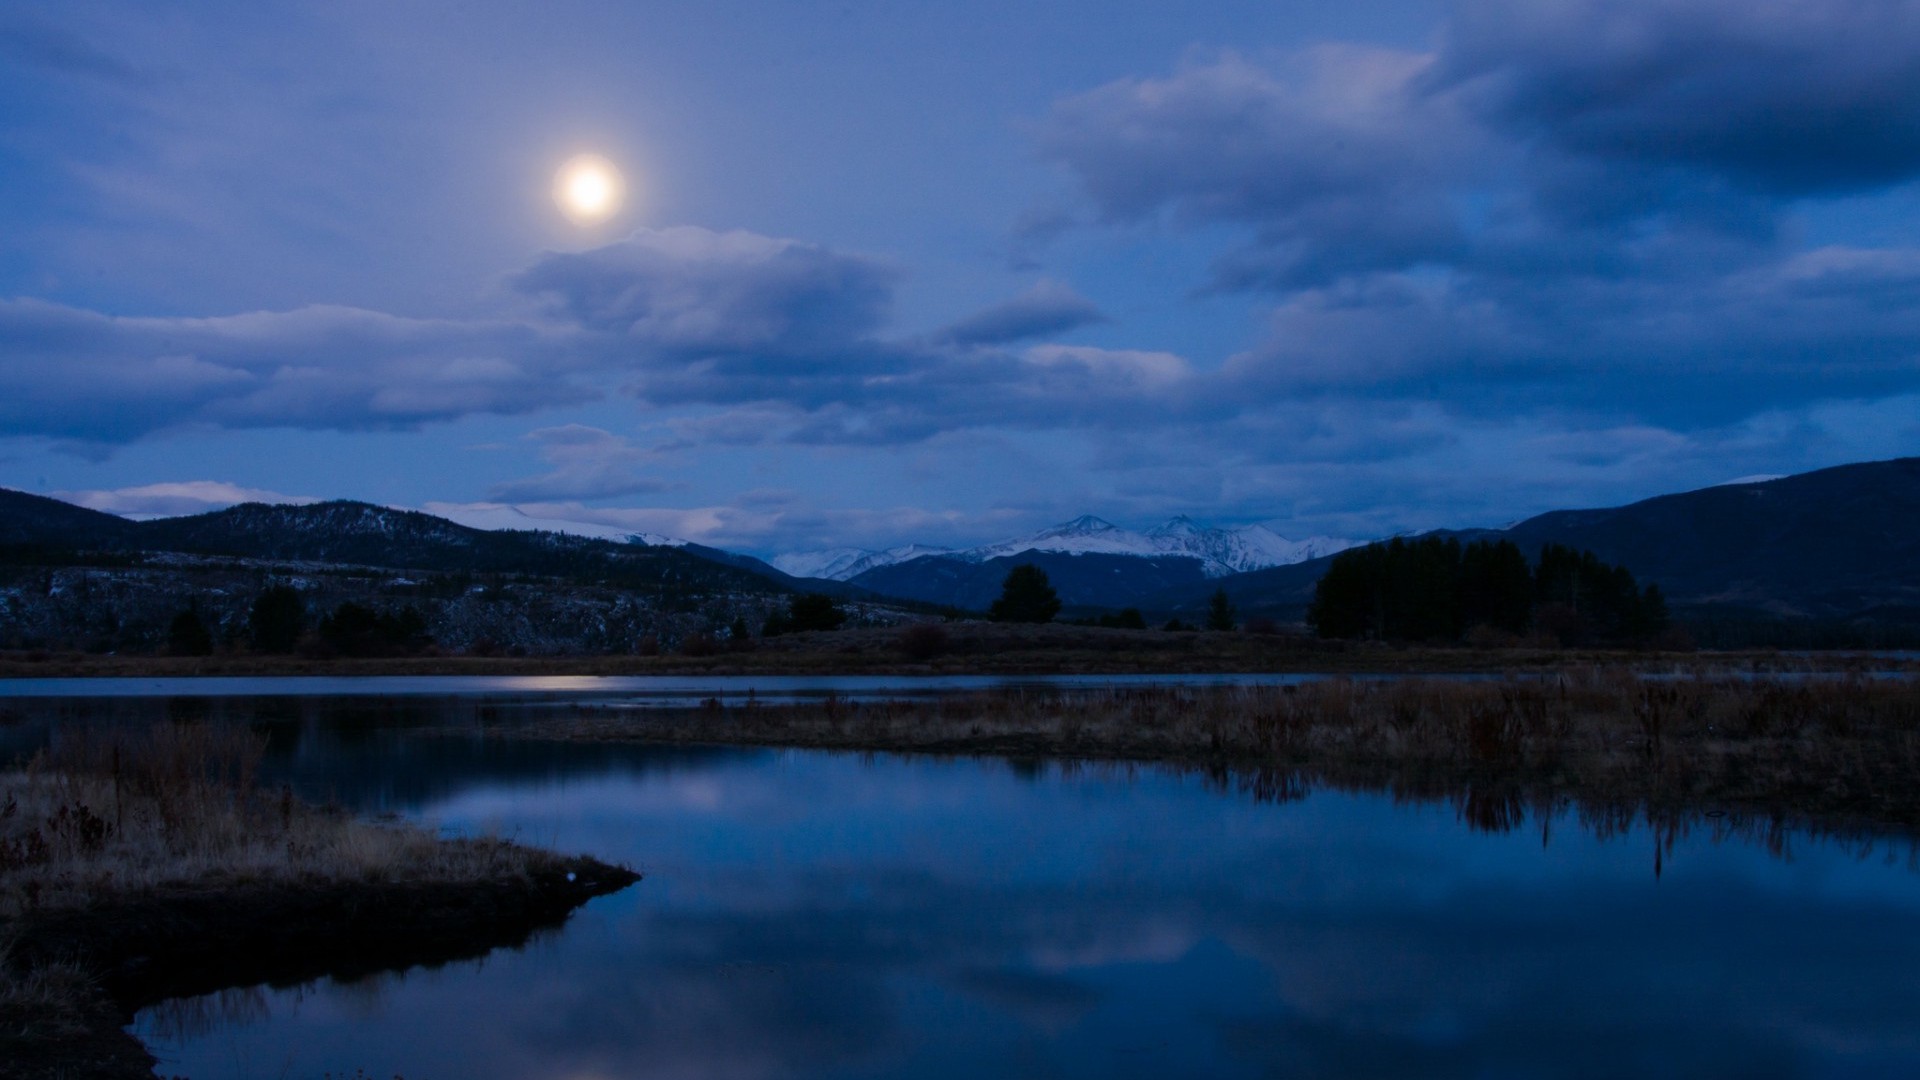 Night, river, lake, mountains, sky | picture, photo, desktop wallpaper.